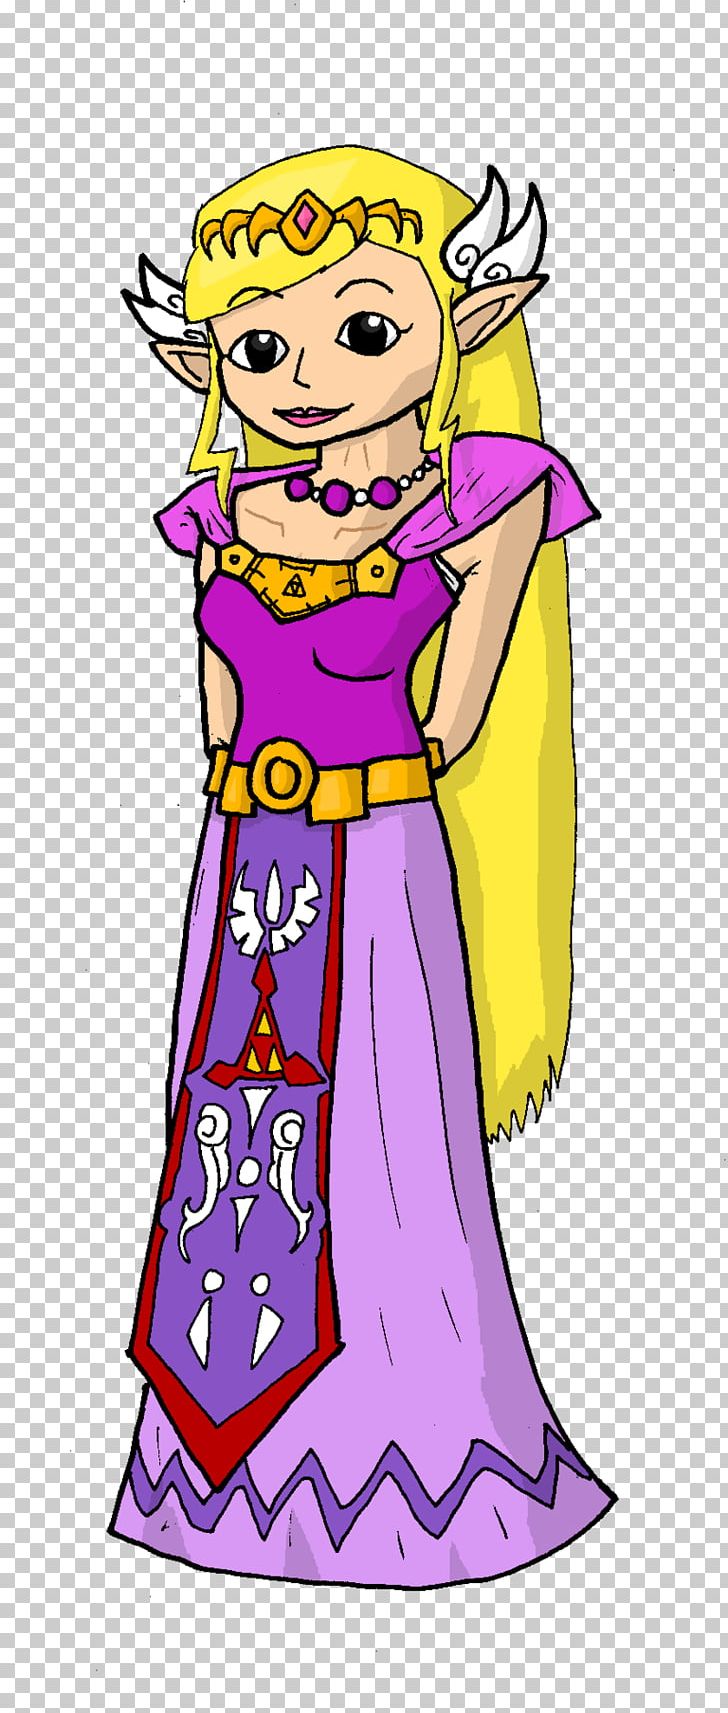 Drawing Princess Zelda Line Art PNG, Clipart, Art, Artwork, Cartoon, Clothing, Costume Free PNG Download